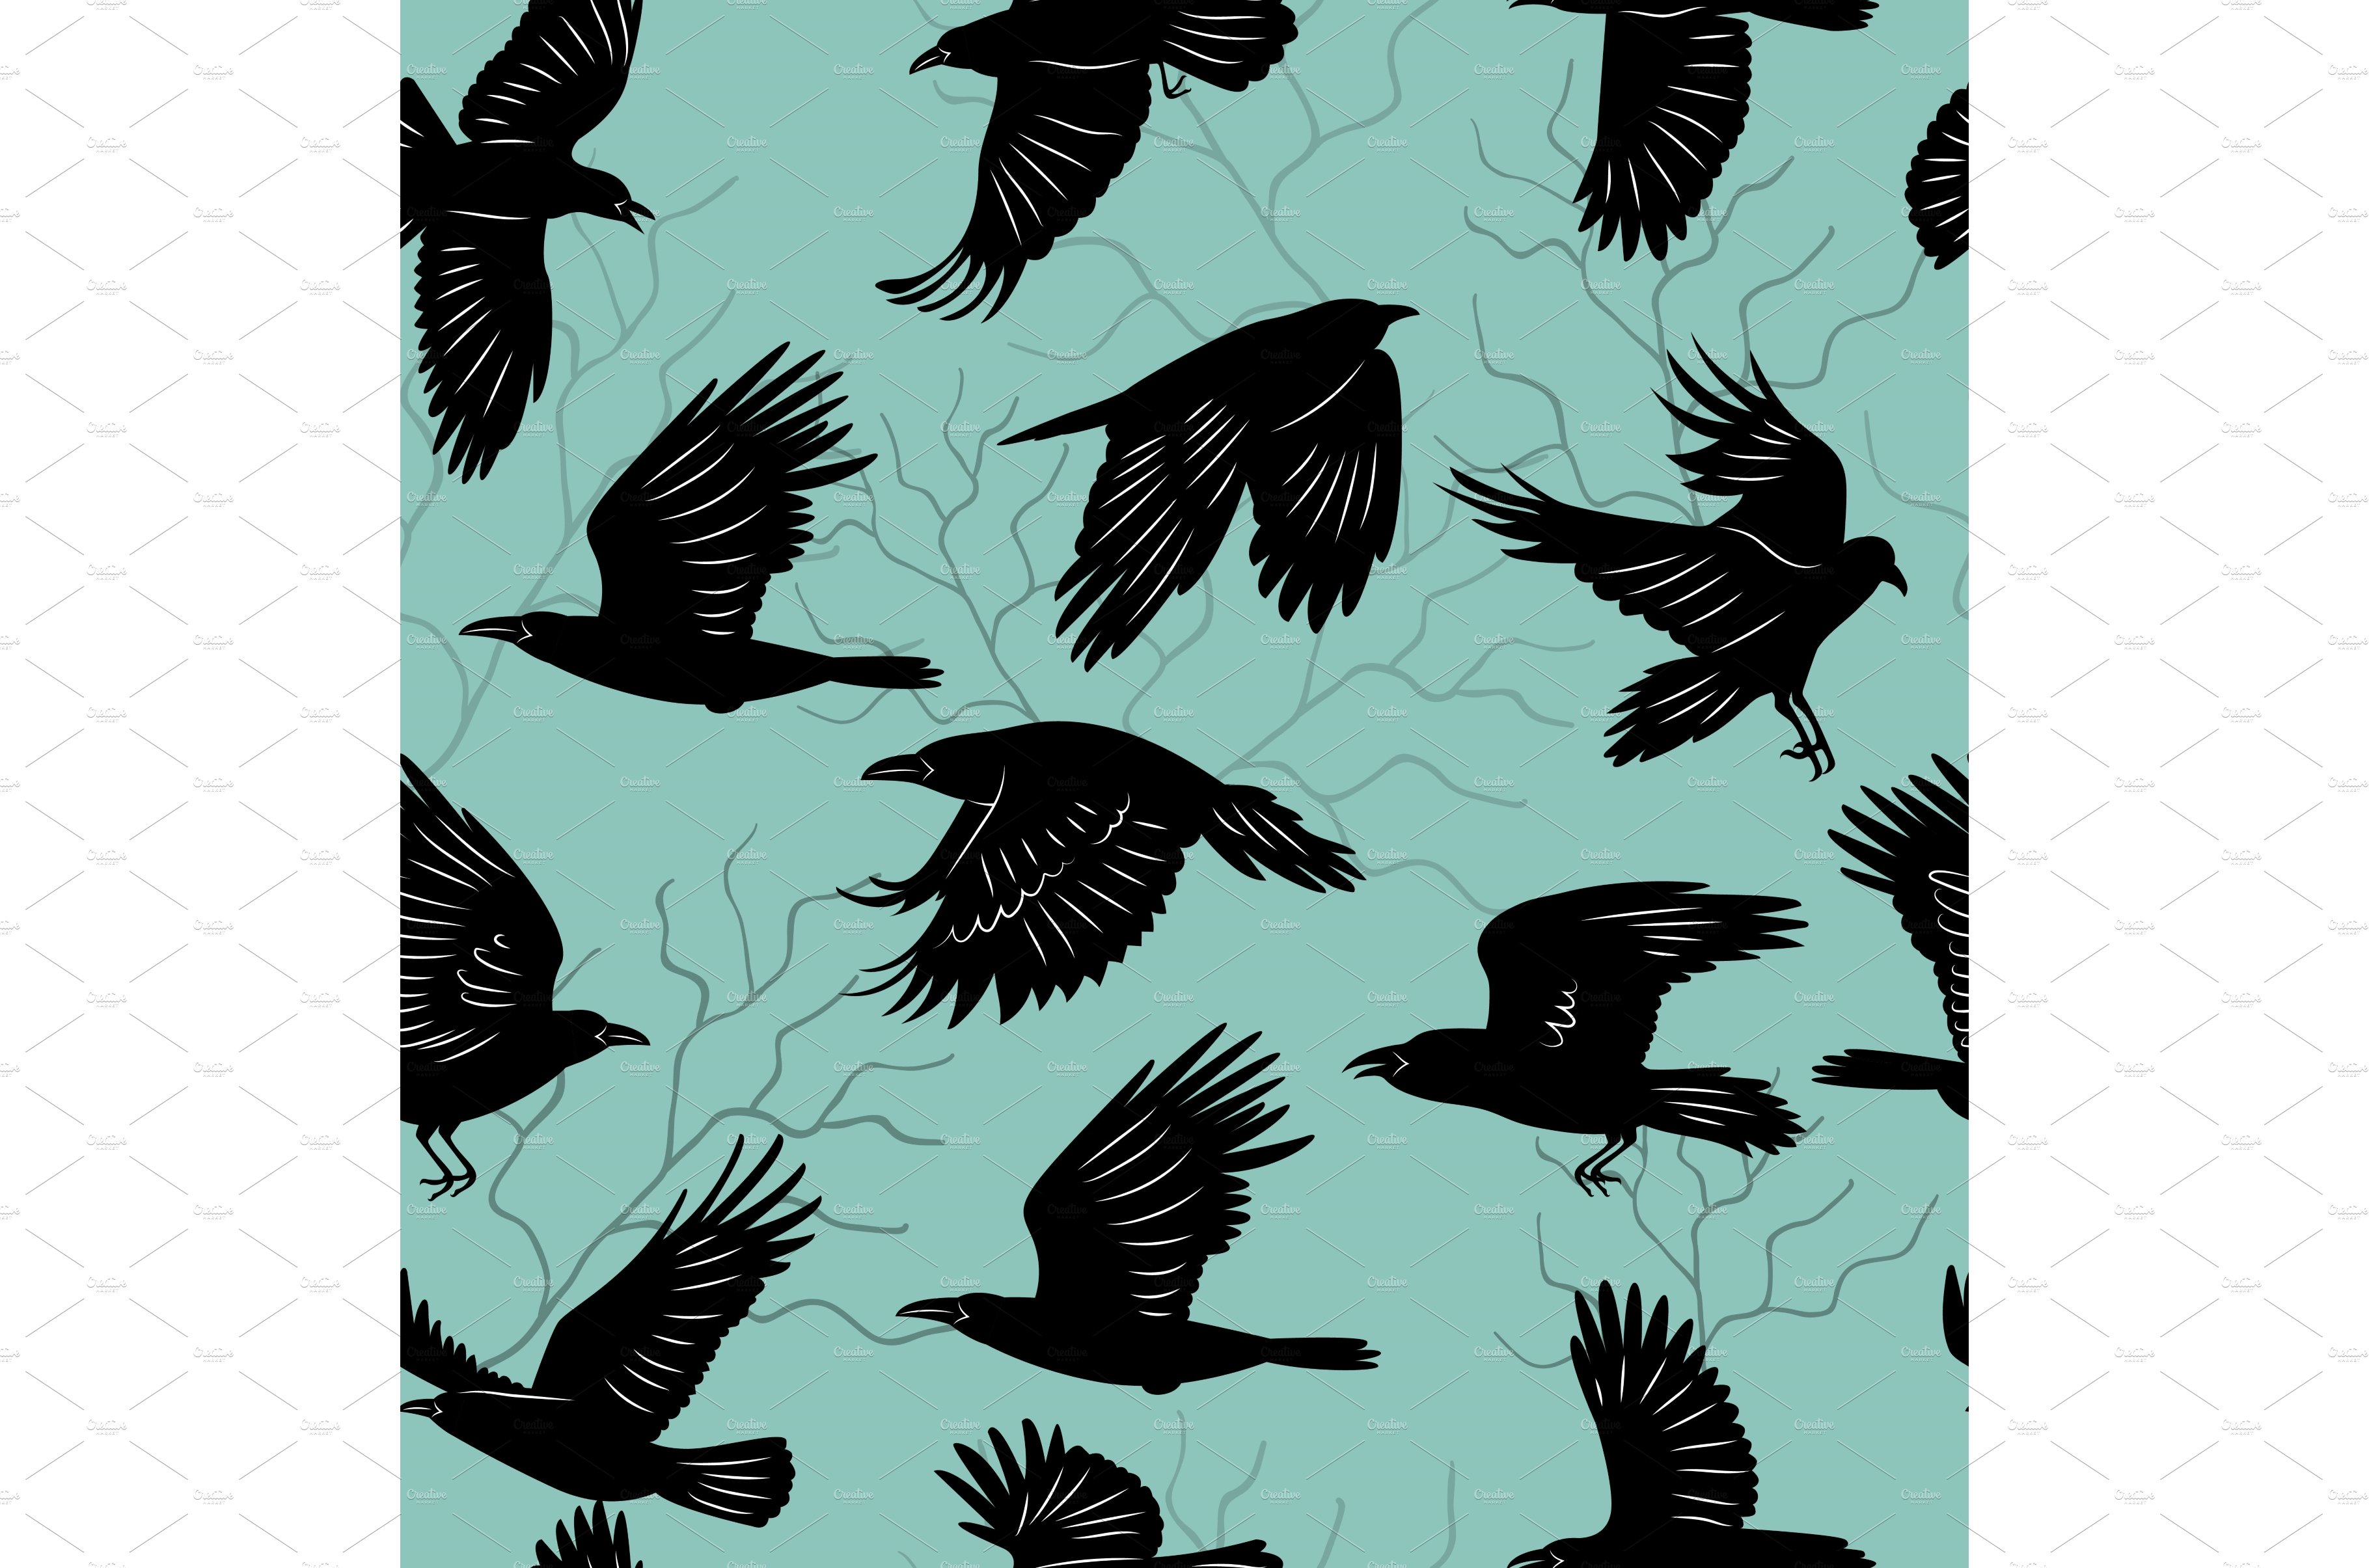 flying bird silhouette pattern